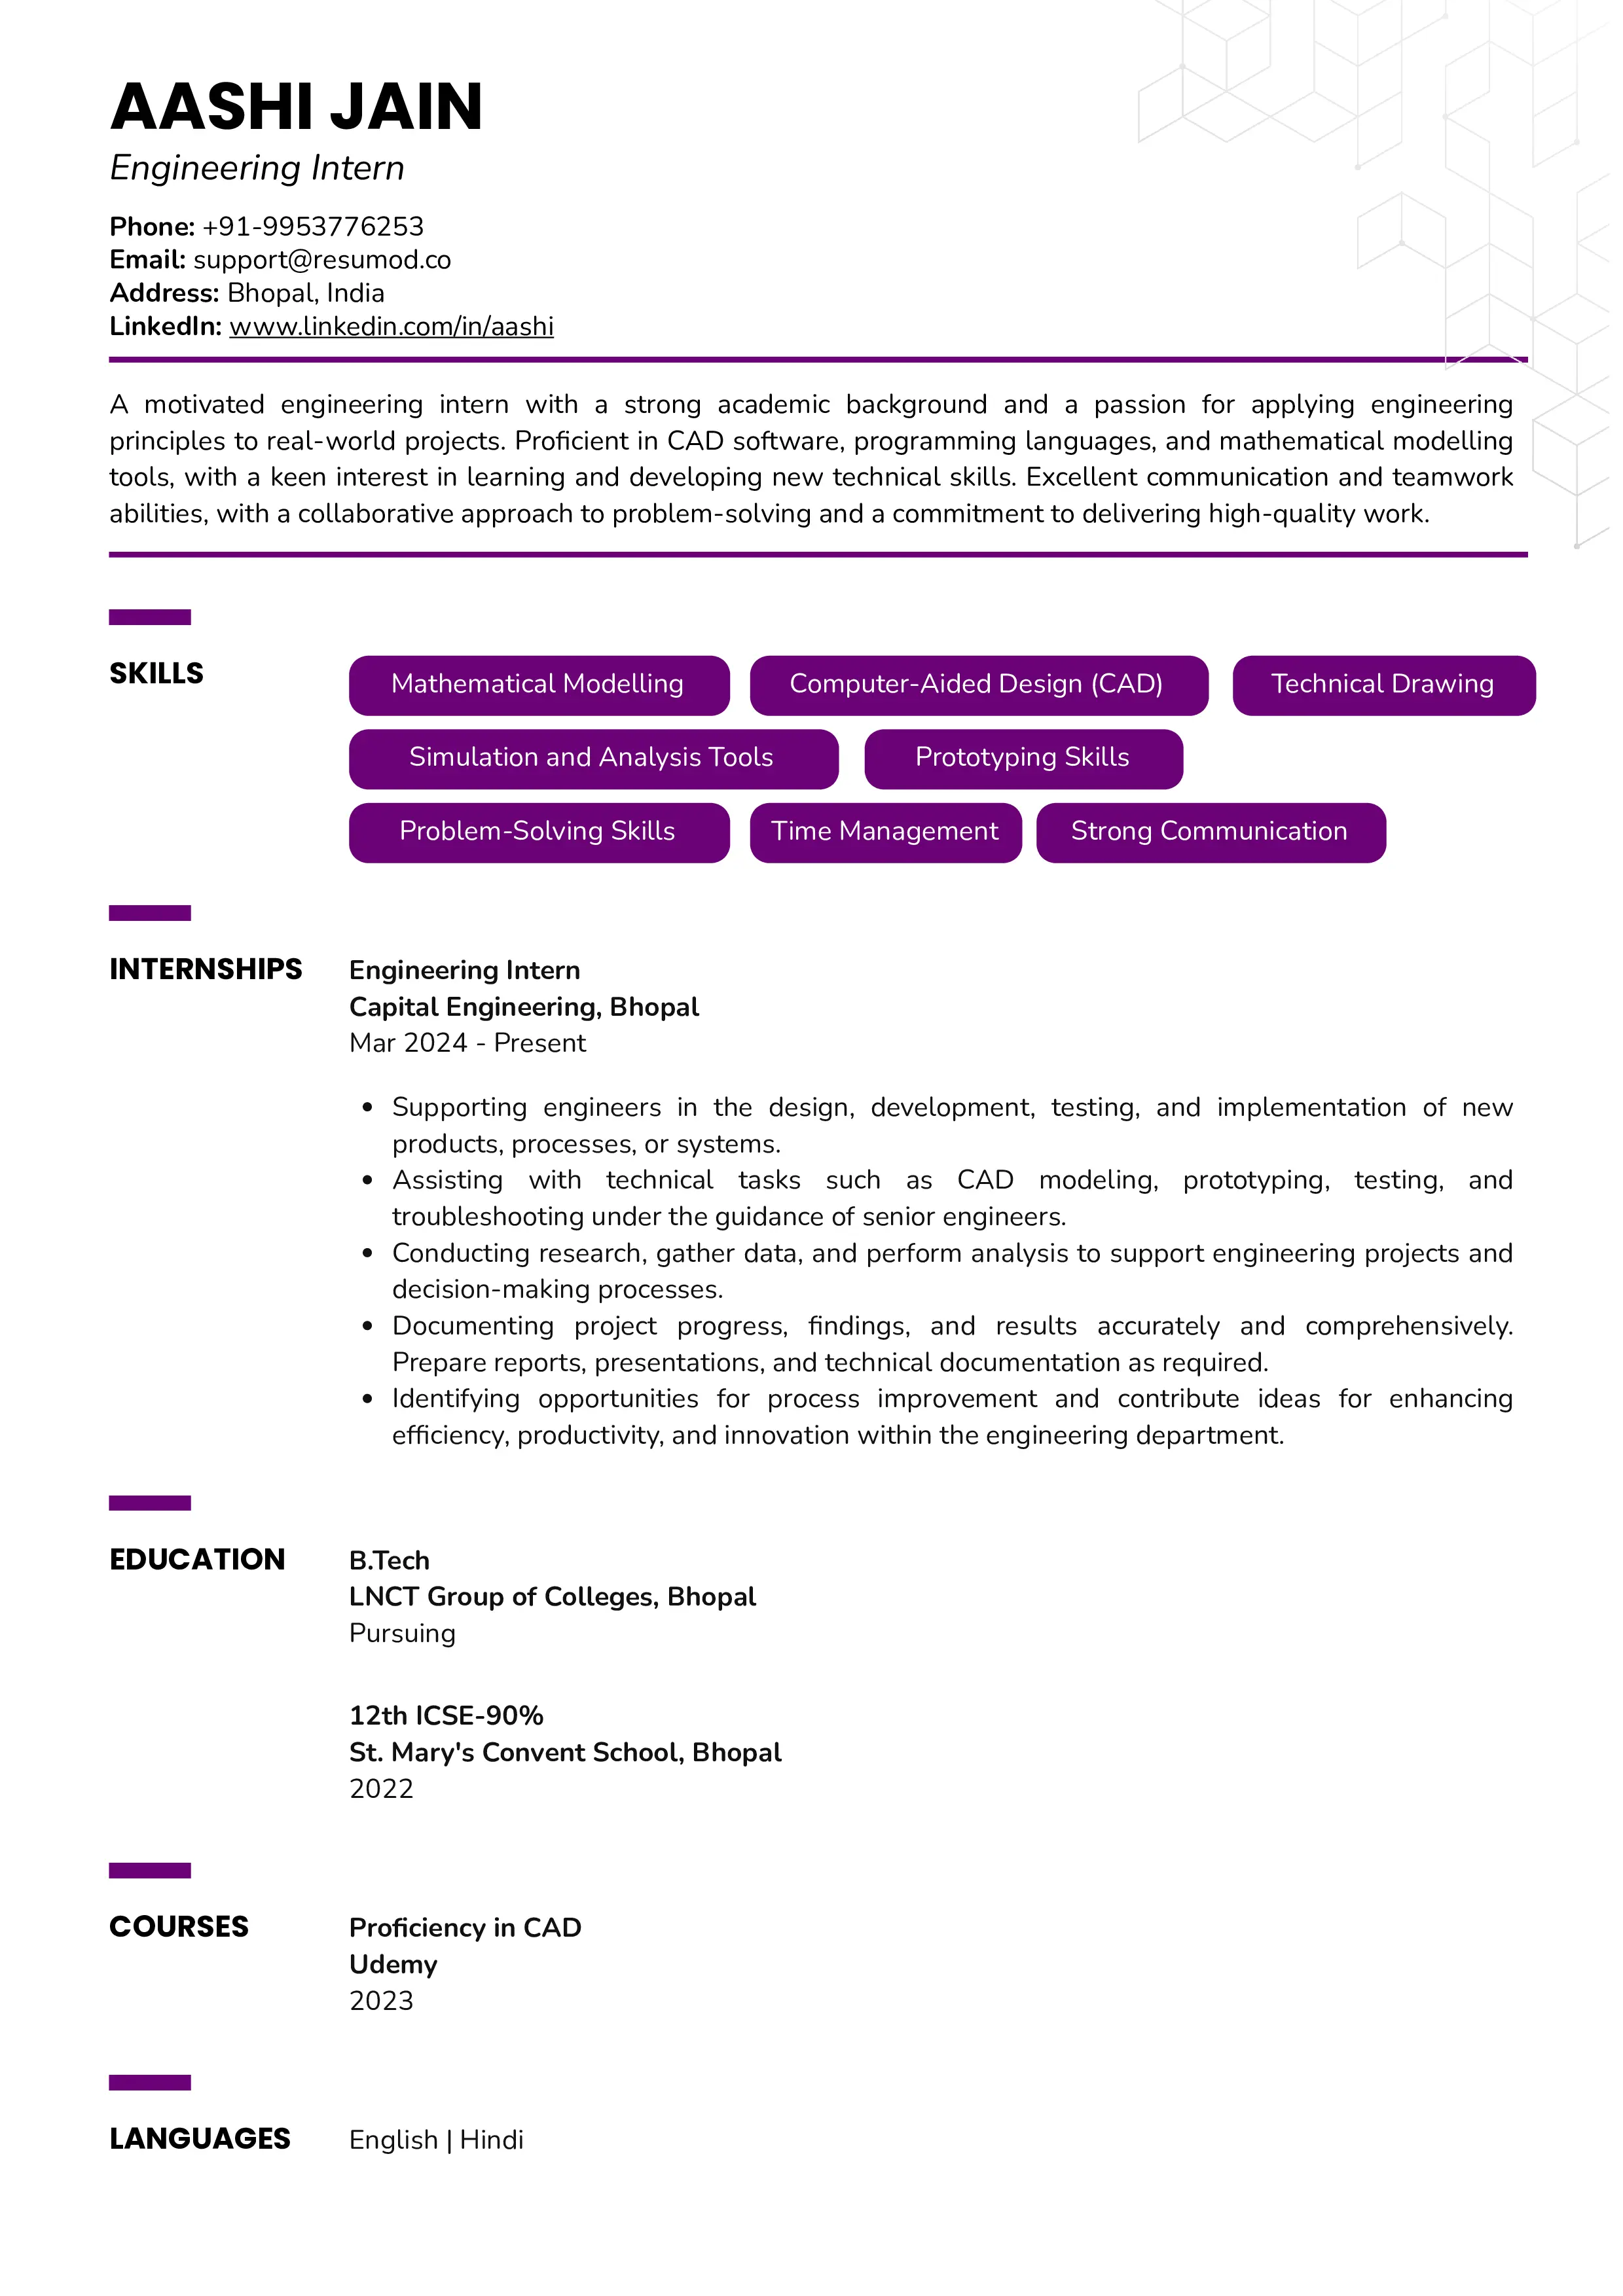 Sample Resume of Engineering Intern | Free Resume Templates & Samples on Resumod.co